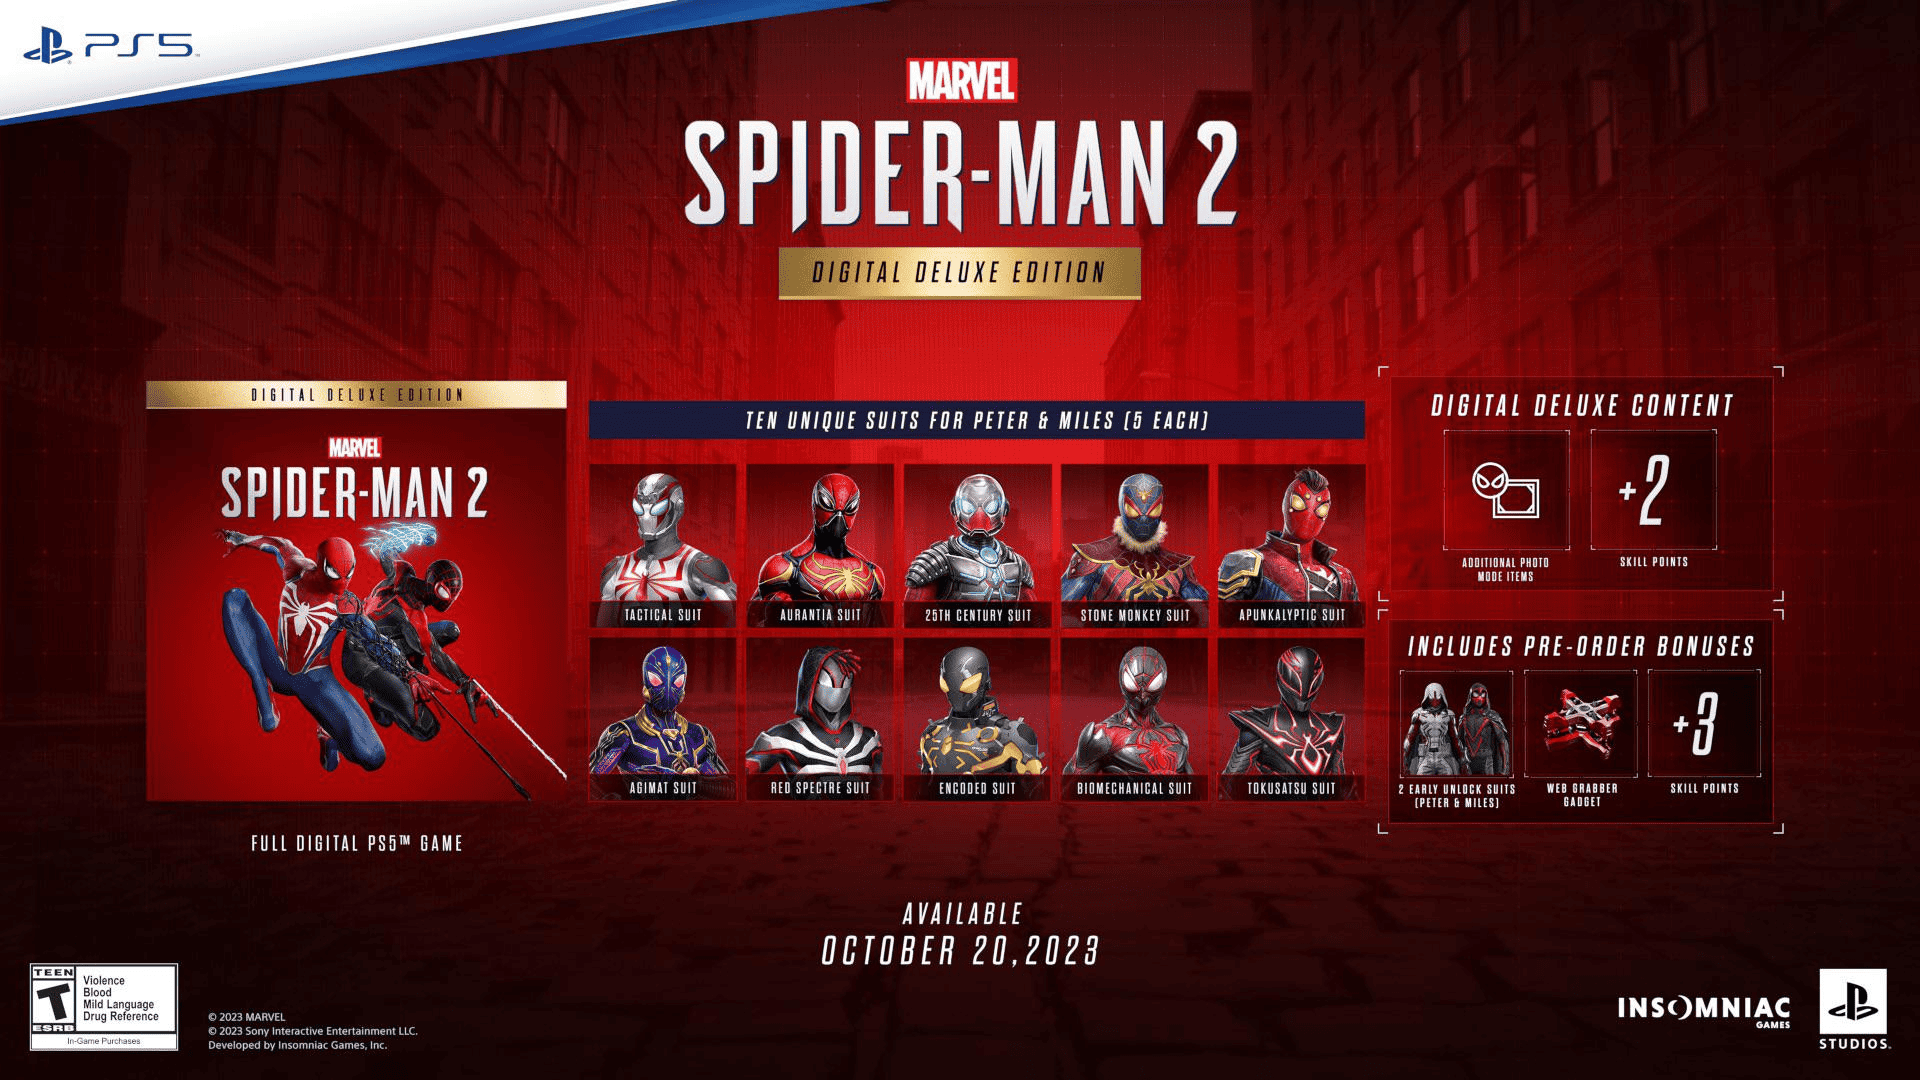 Spider-Man 2 Digital Deluxe suits